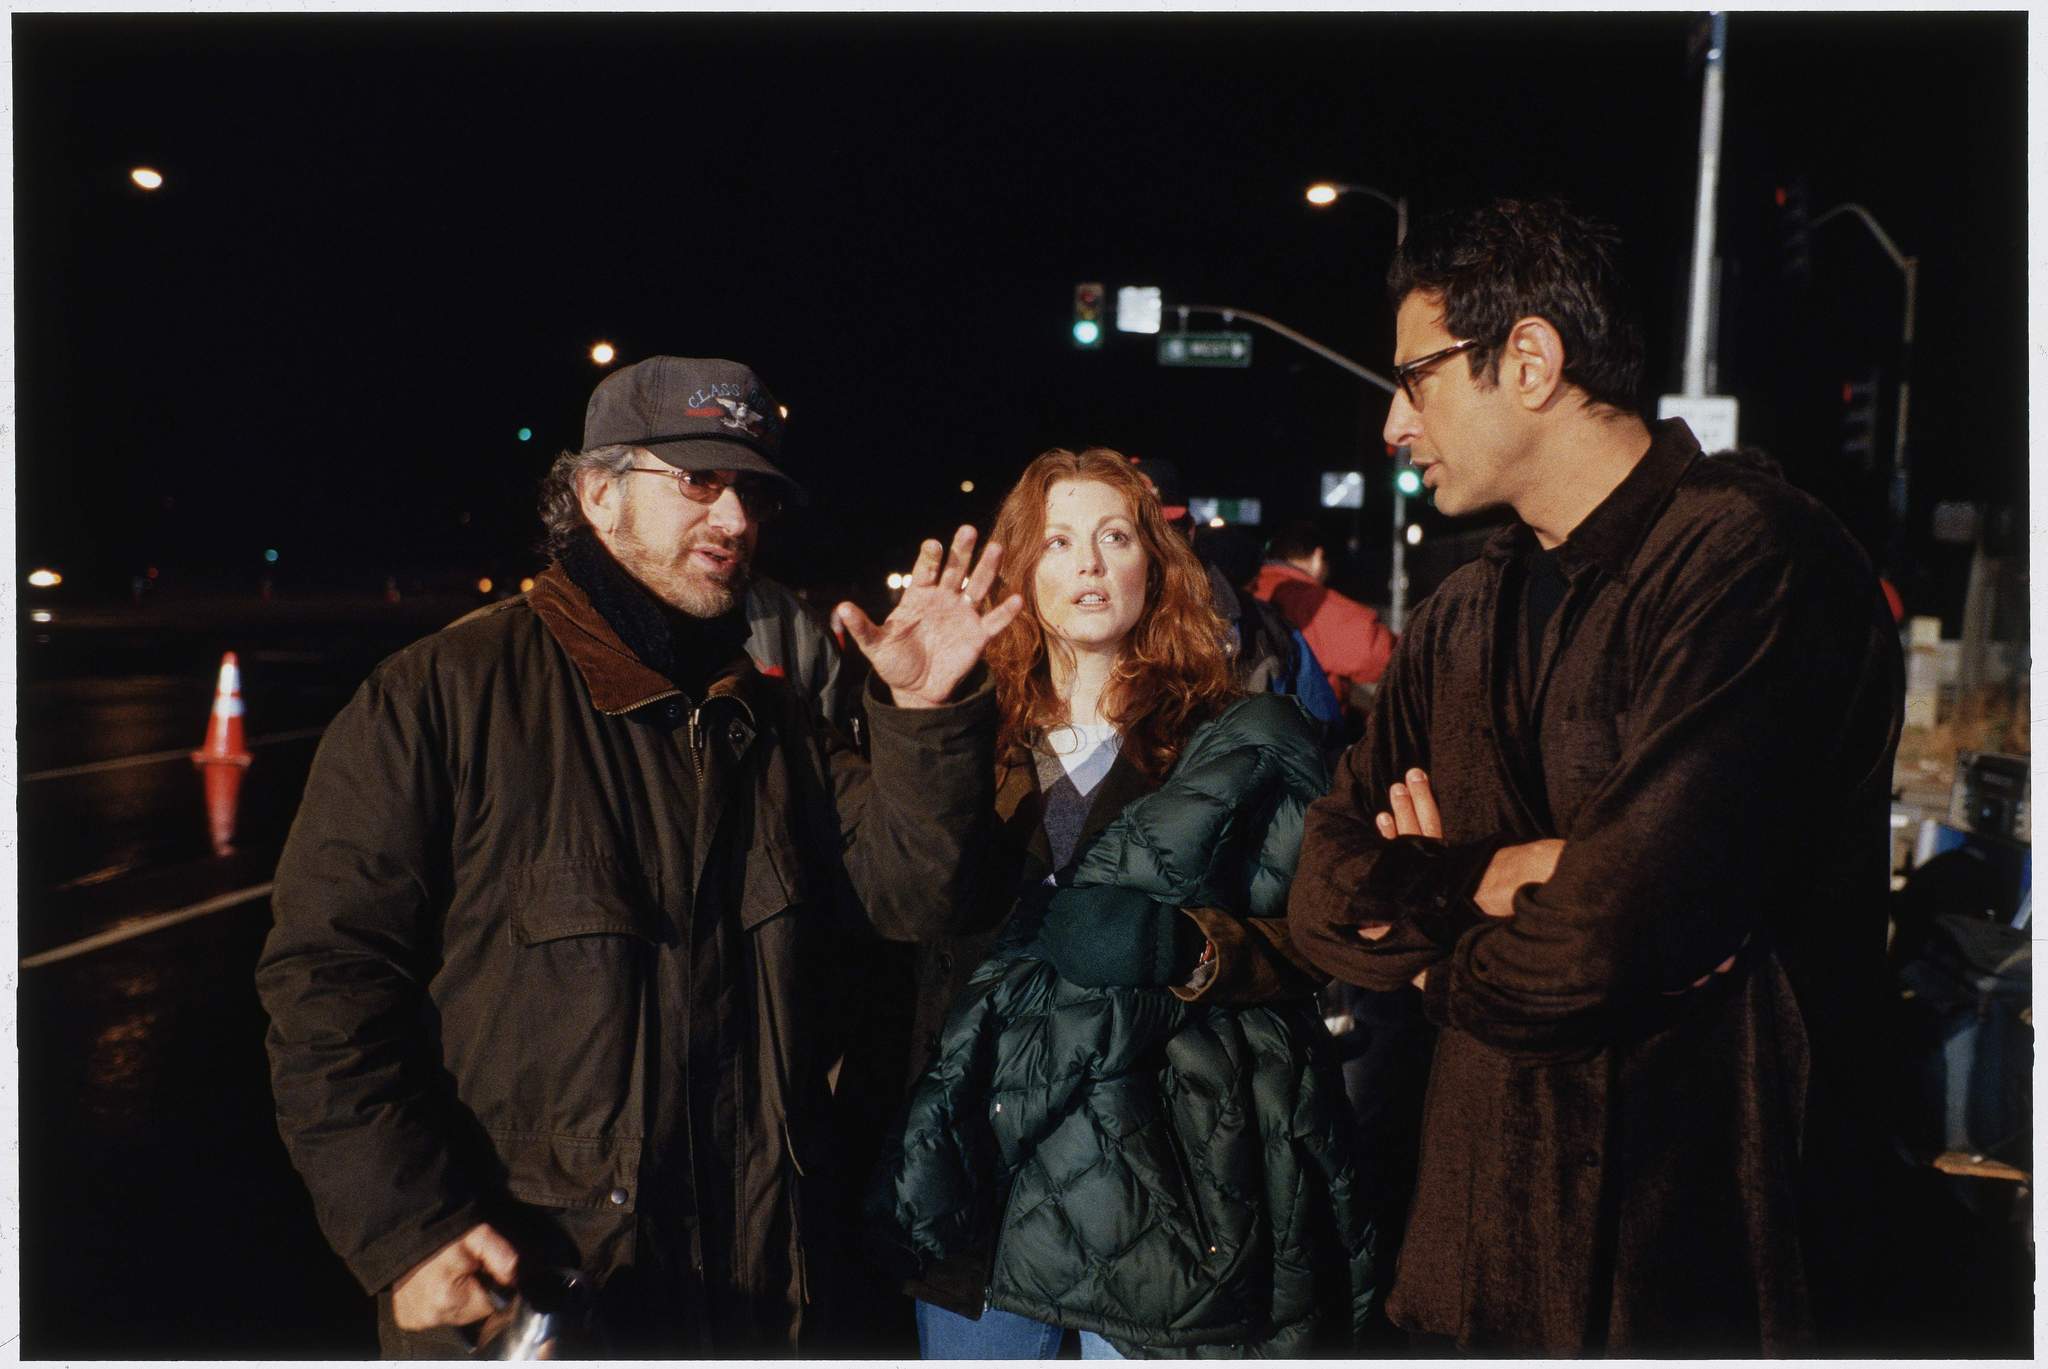 Still of Jeff Goldblum, Julianne Moore and Steven Spielberg in The Lost World: Jurassic Park (1997)